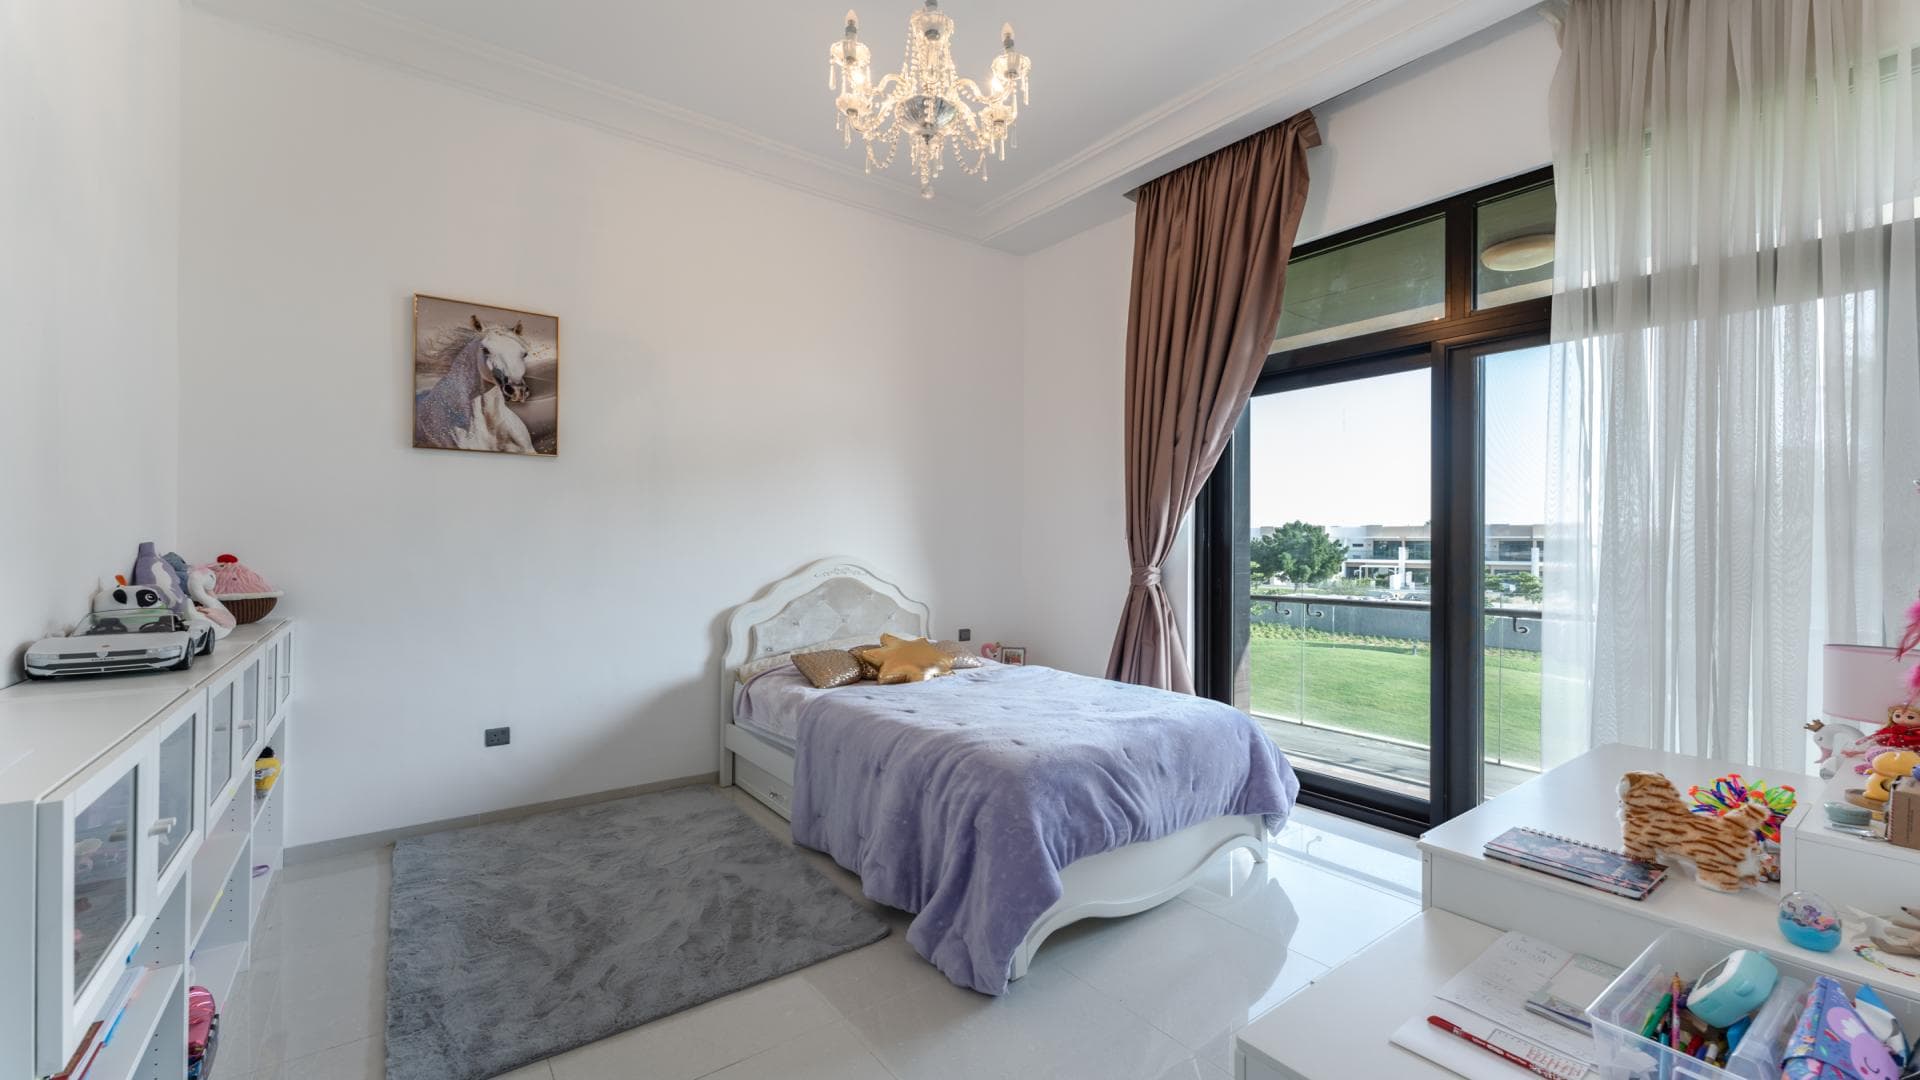 5 Bedroom Villa For Rent Rose 1 Lp38889 1fb0fd6c841c7800.jpg